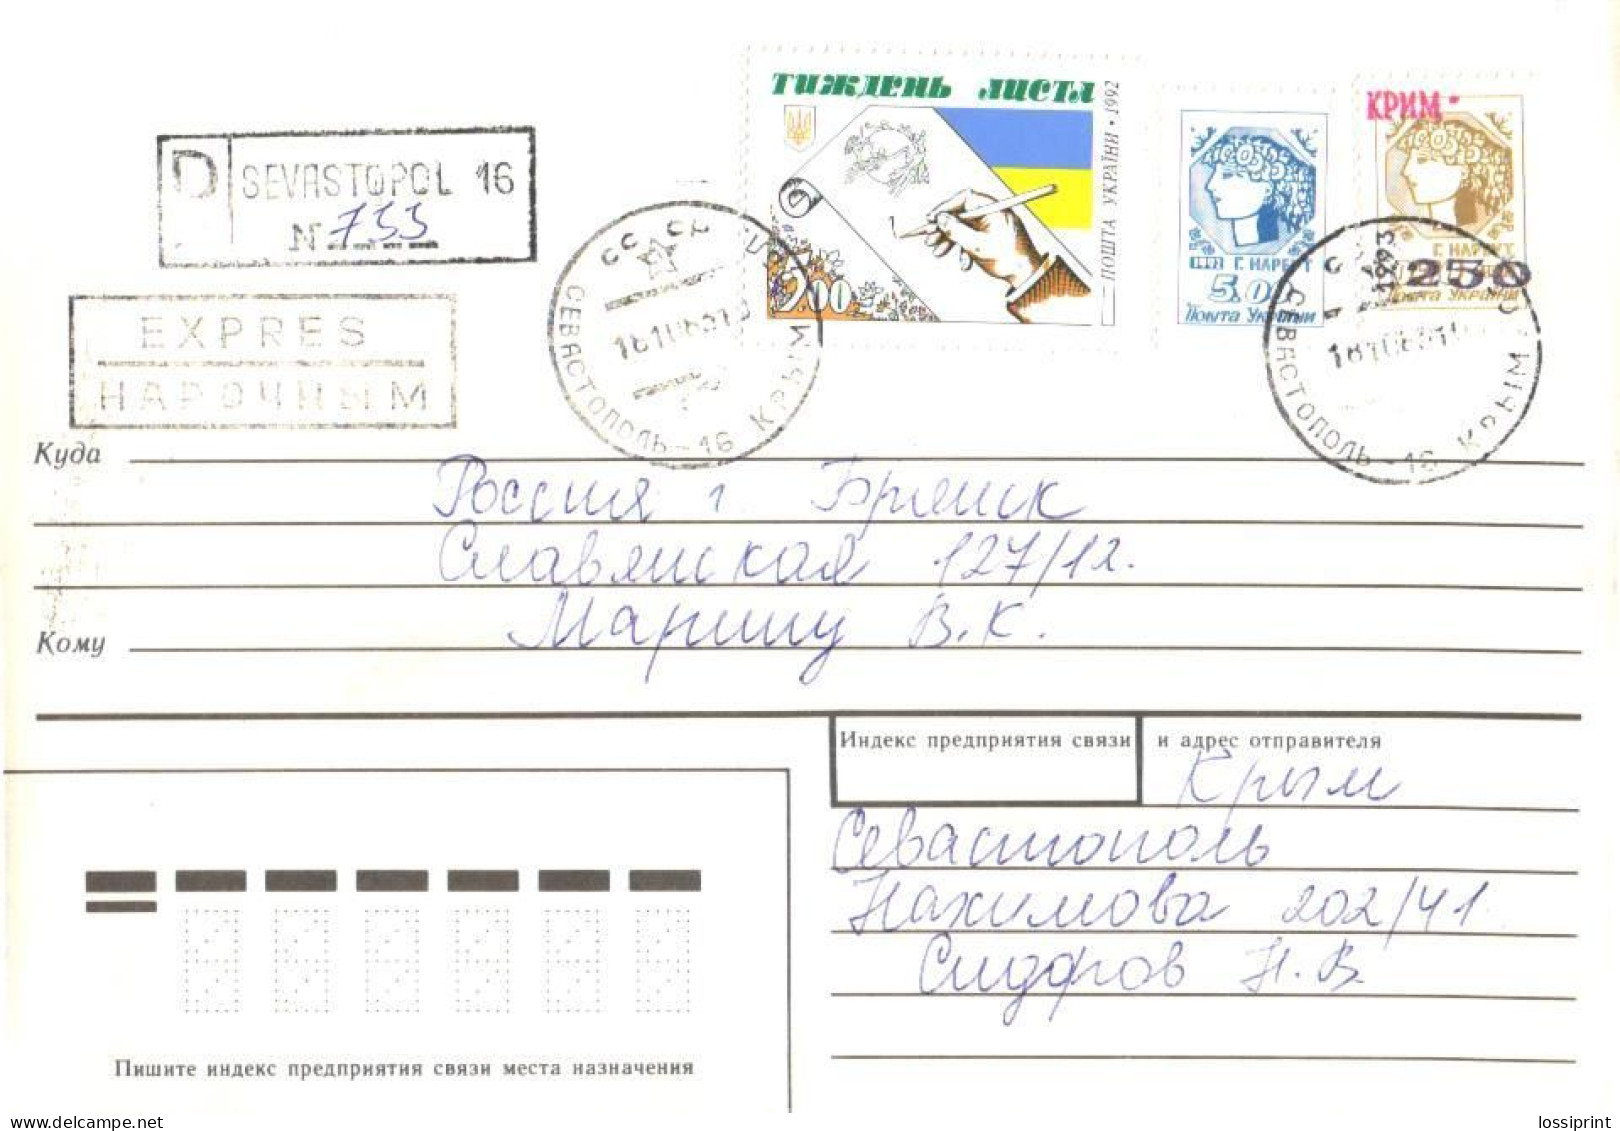 Ukraine:Ukraina:Registered Letter From Sevastopol With Expres Cancellation And Overprinted Stamp, 1993 - Ukraine